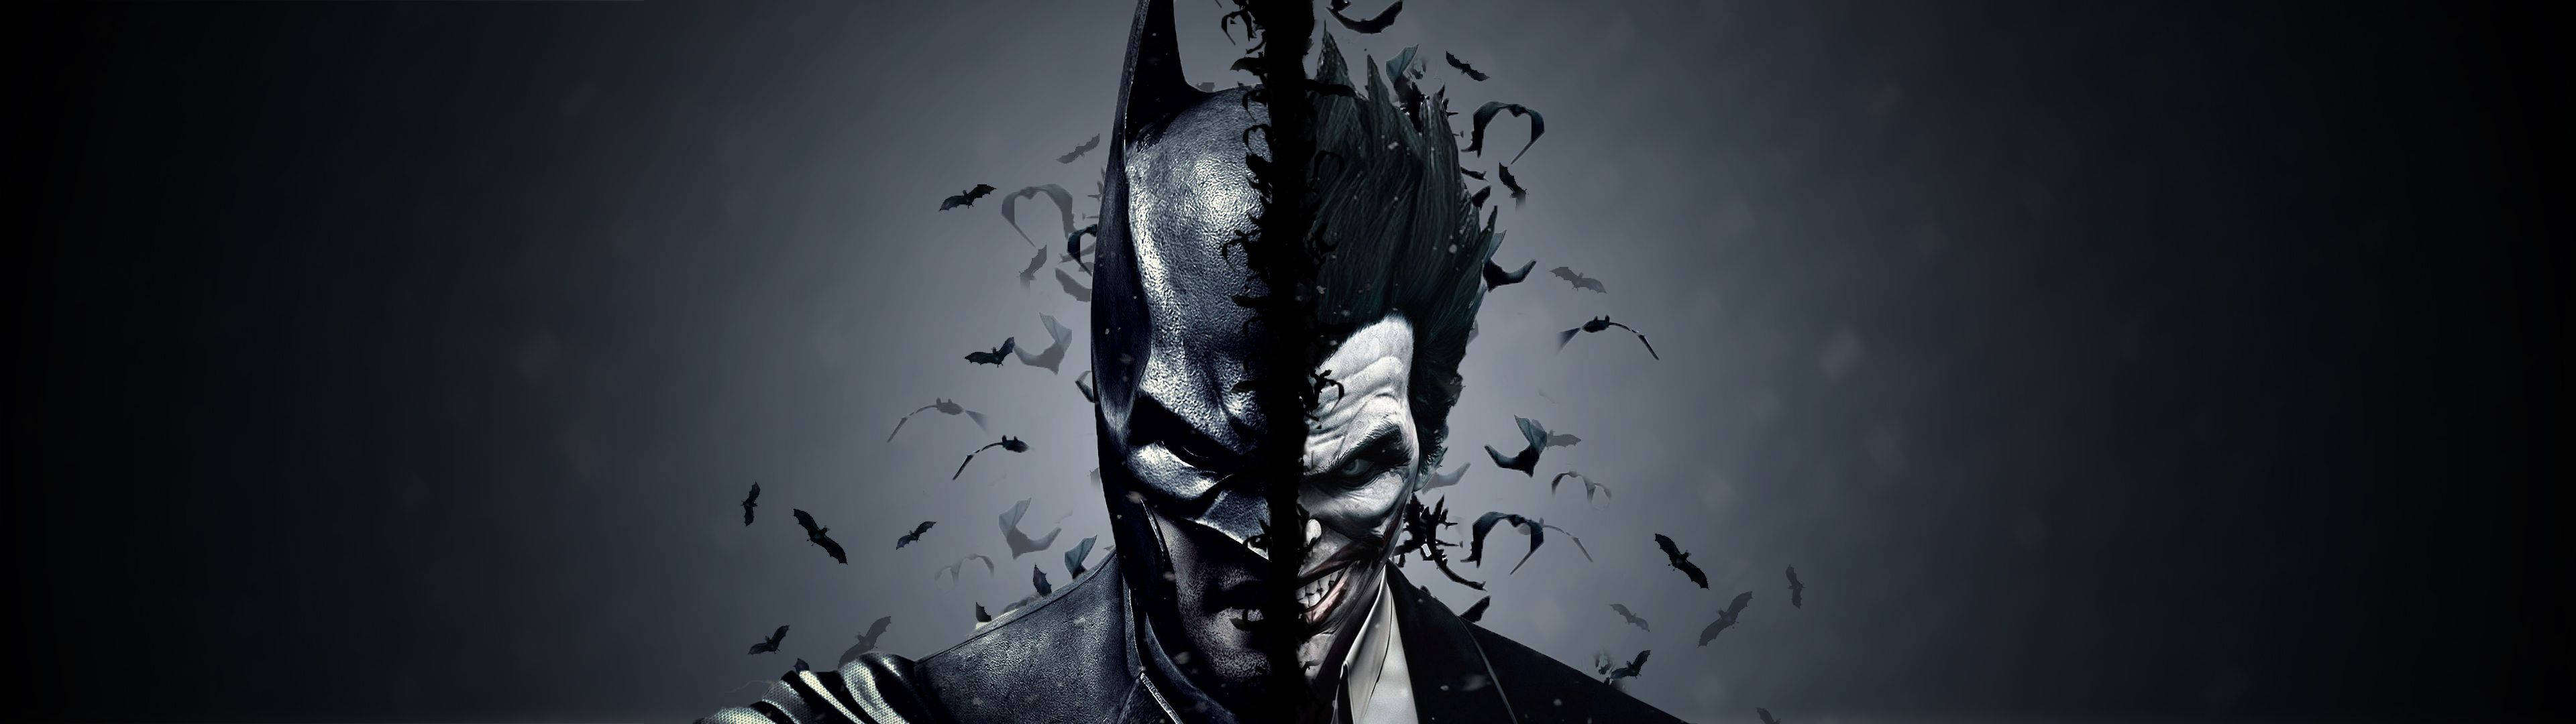 Joker Batman Dual Monitor Background